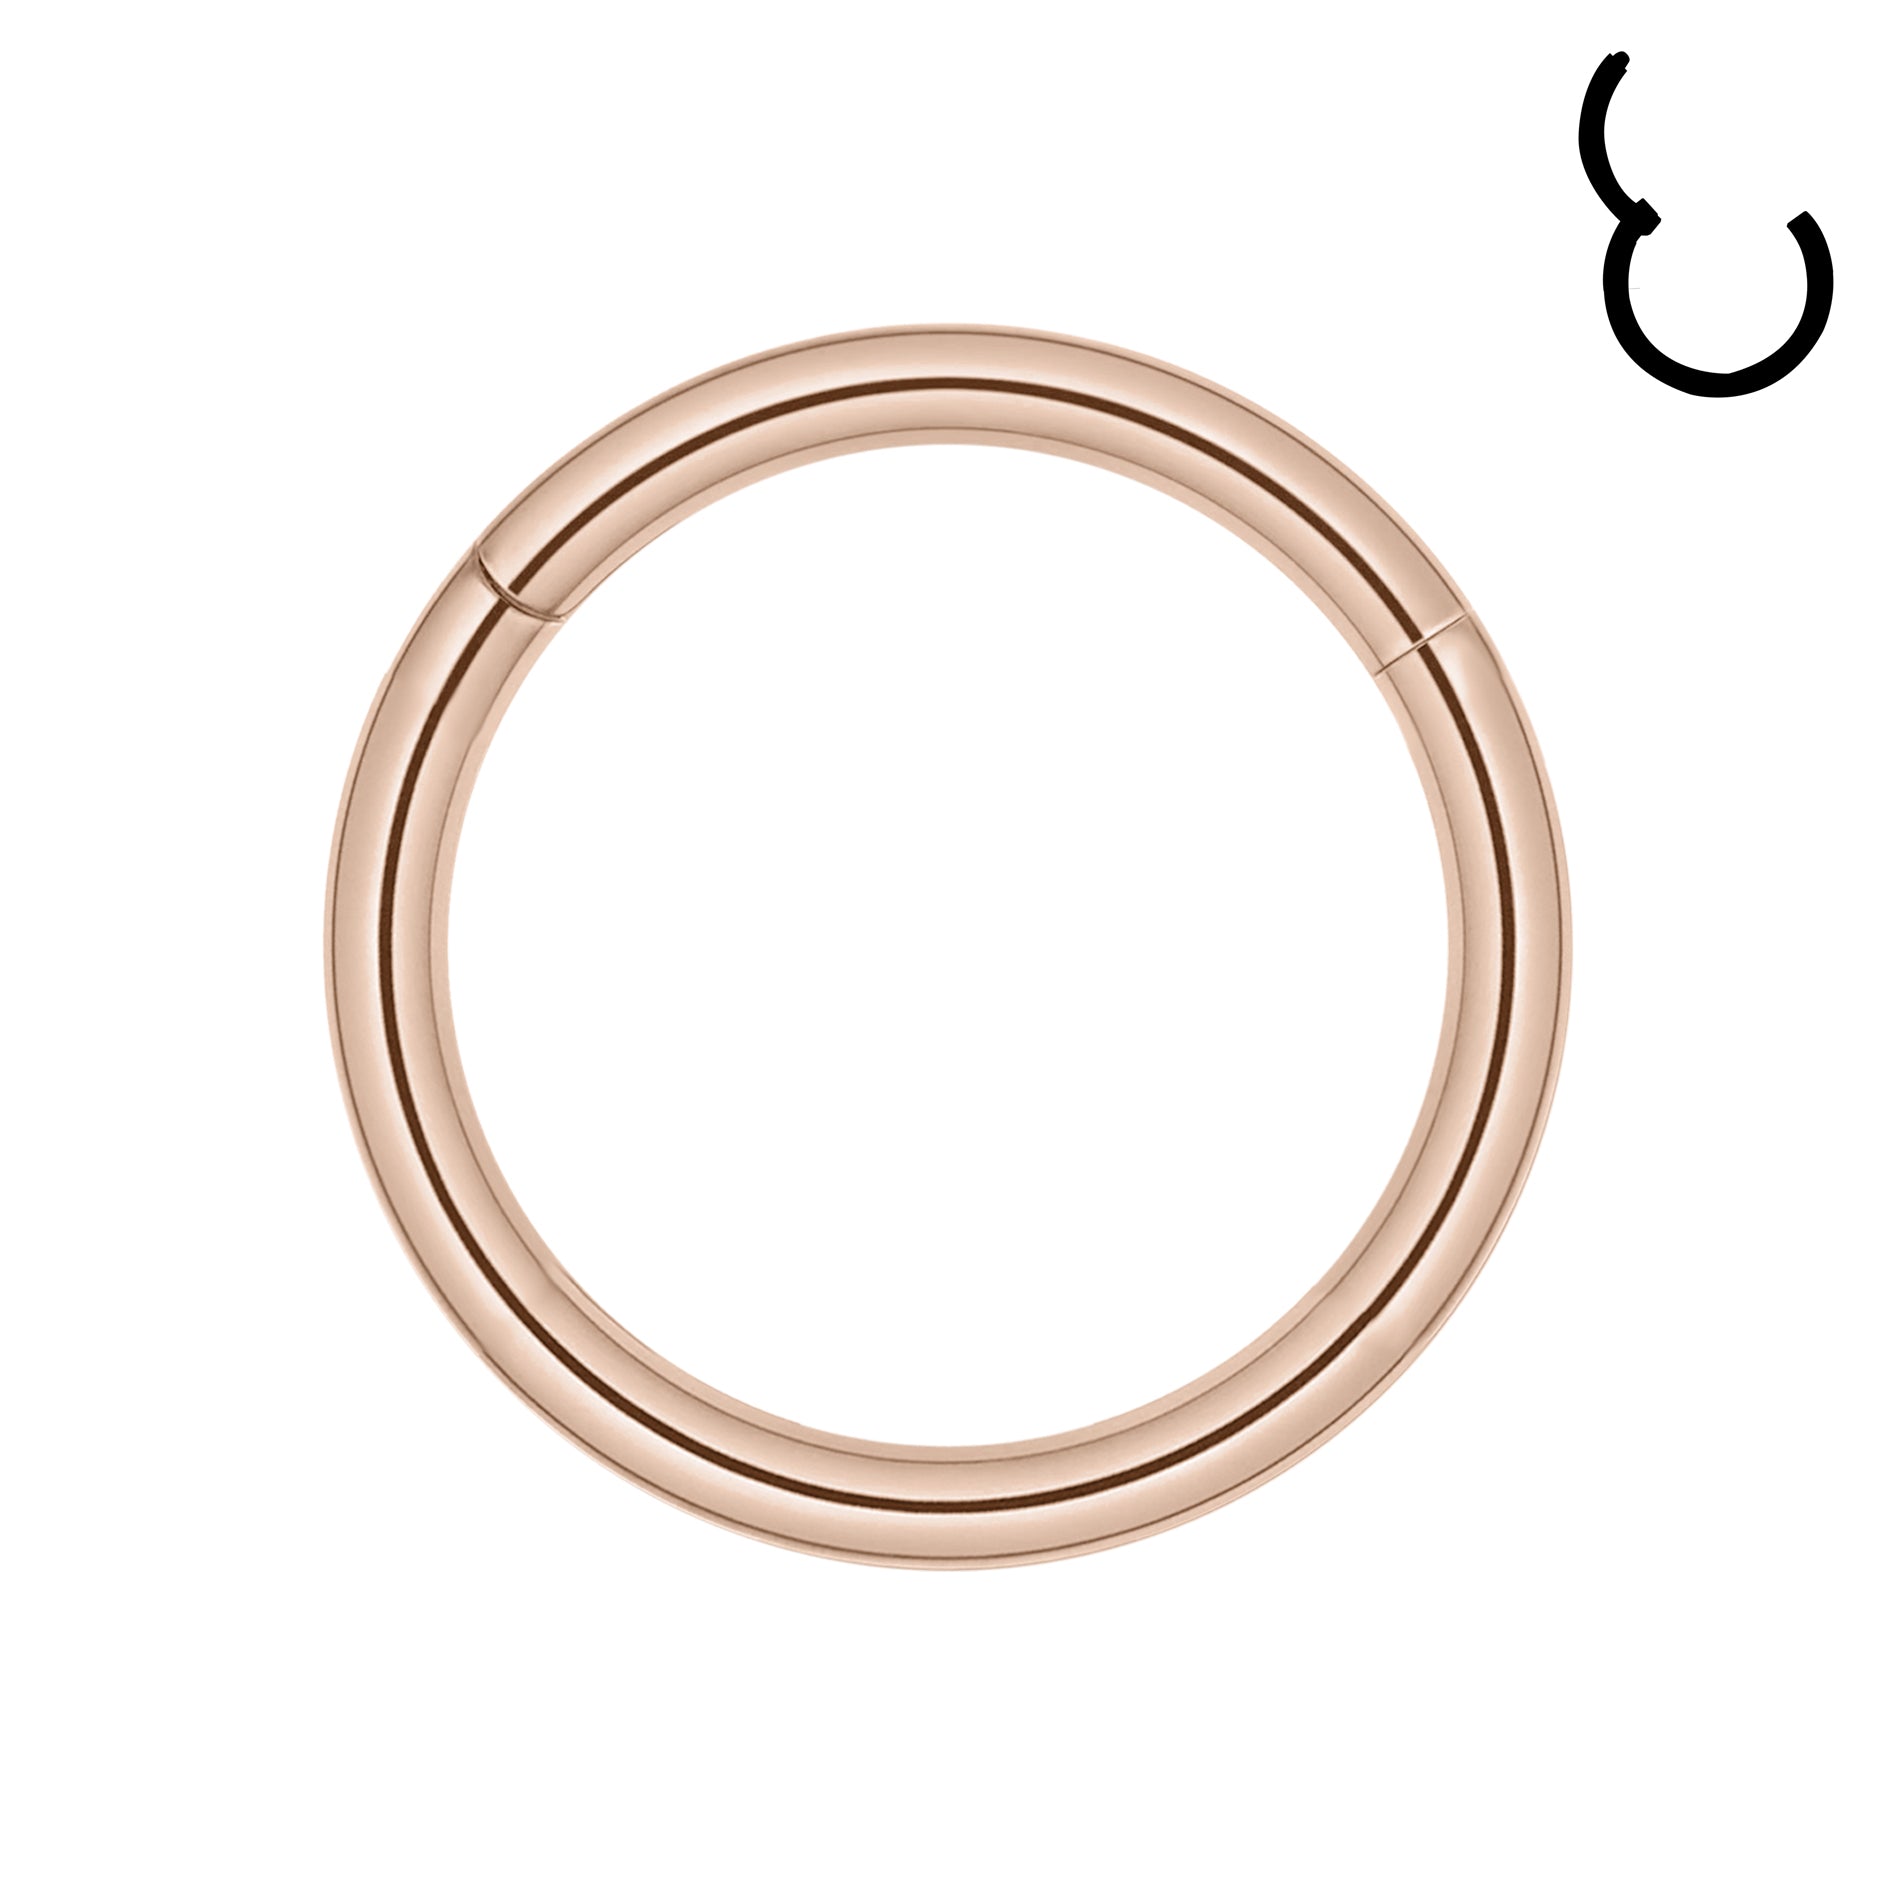 16g-rose-gold-nose-ring-septum-clicker-basic-helix-cartilage-piercing